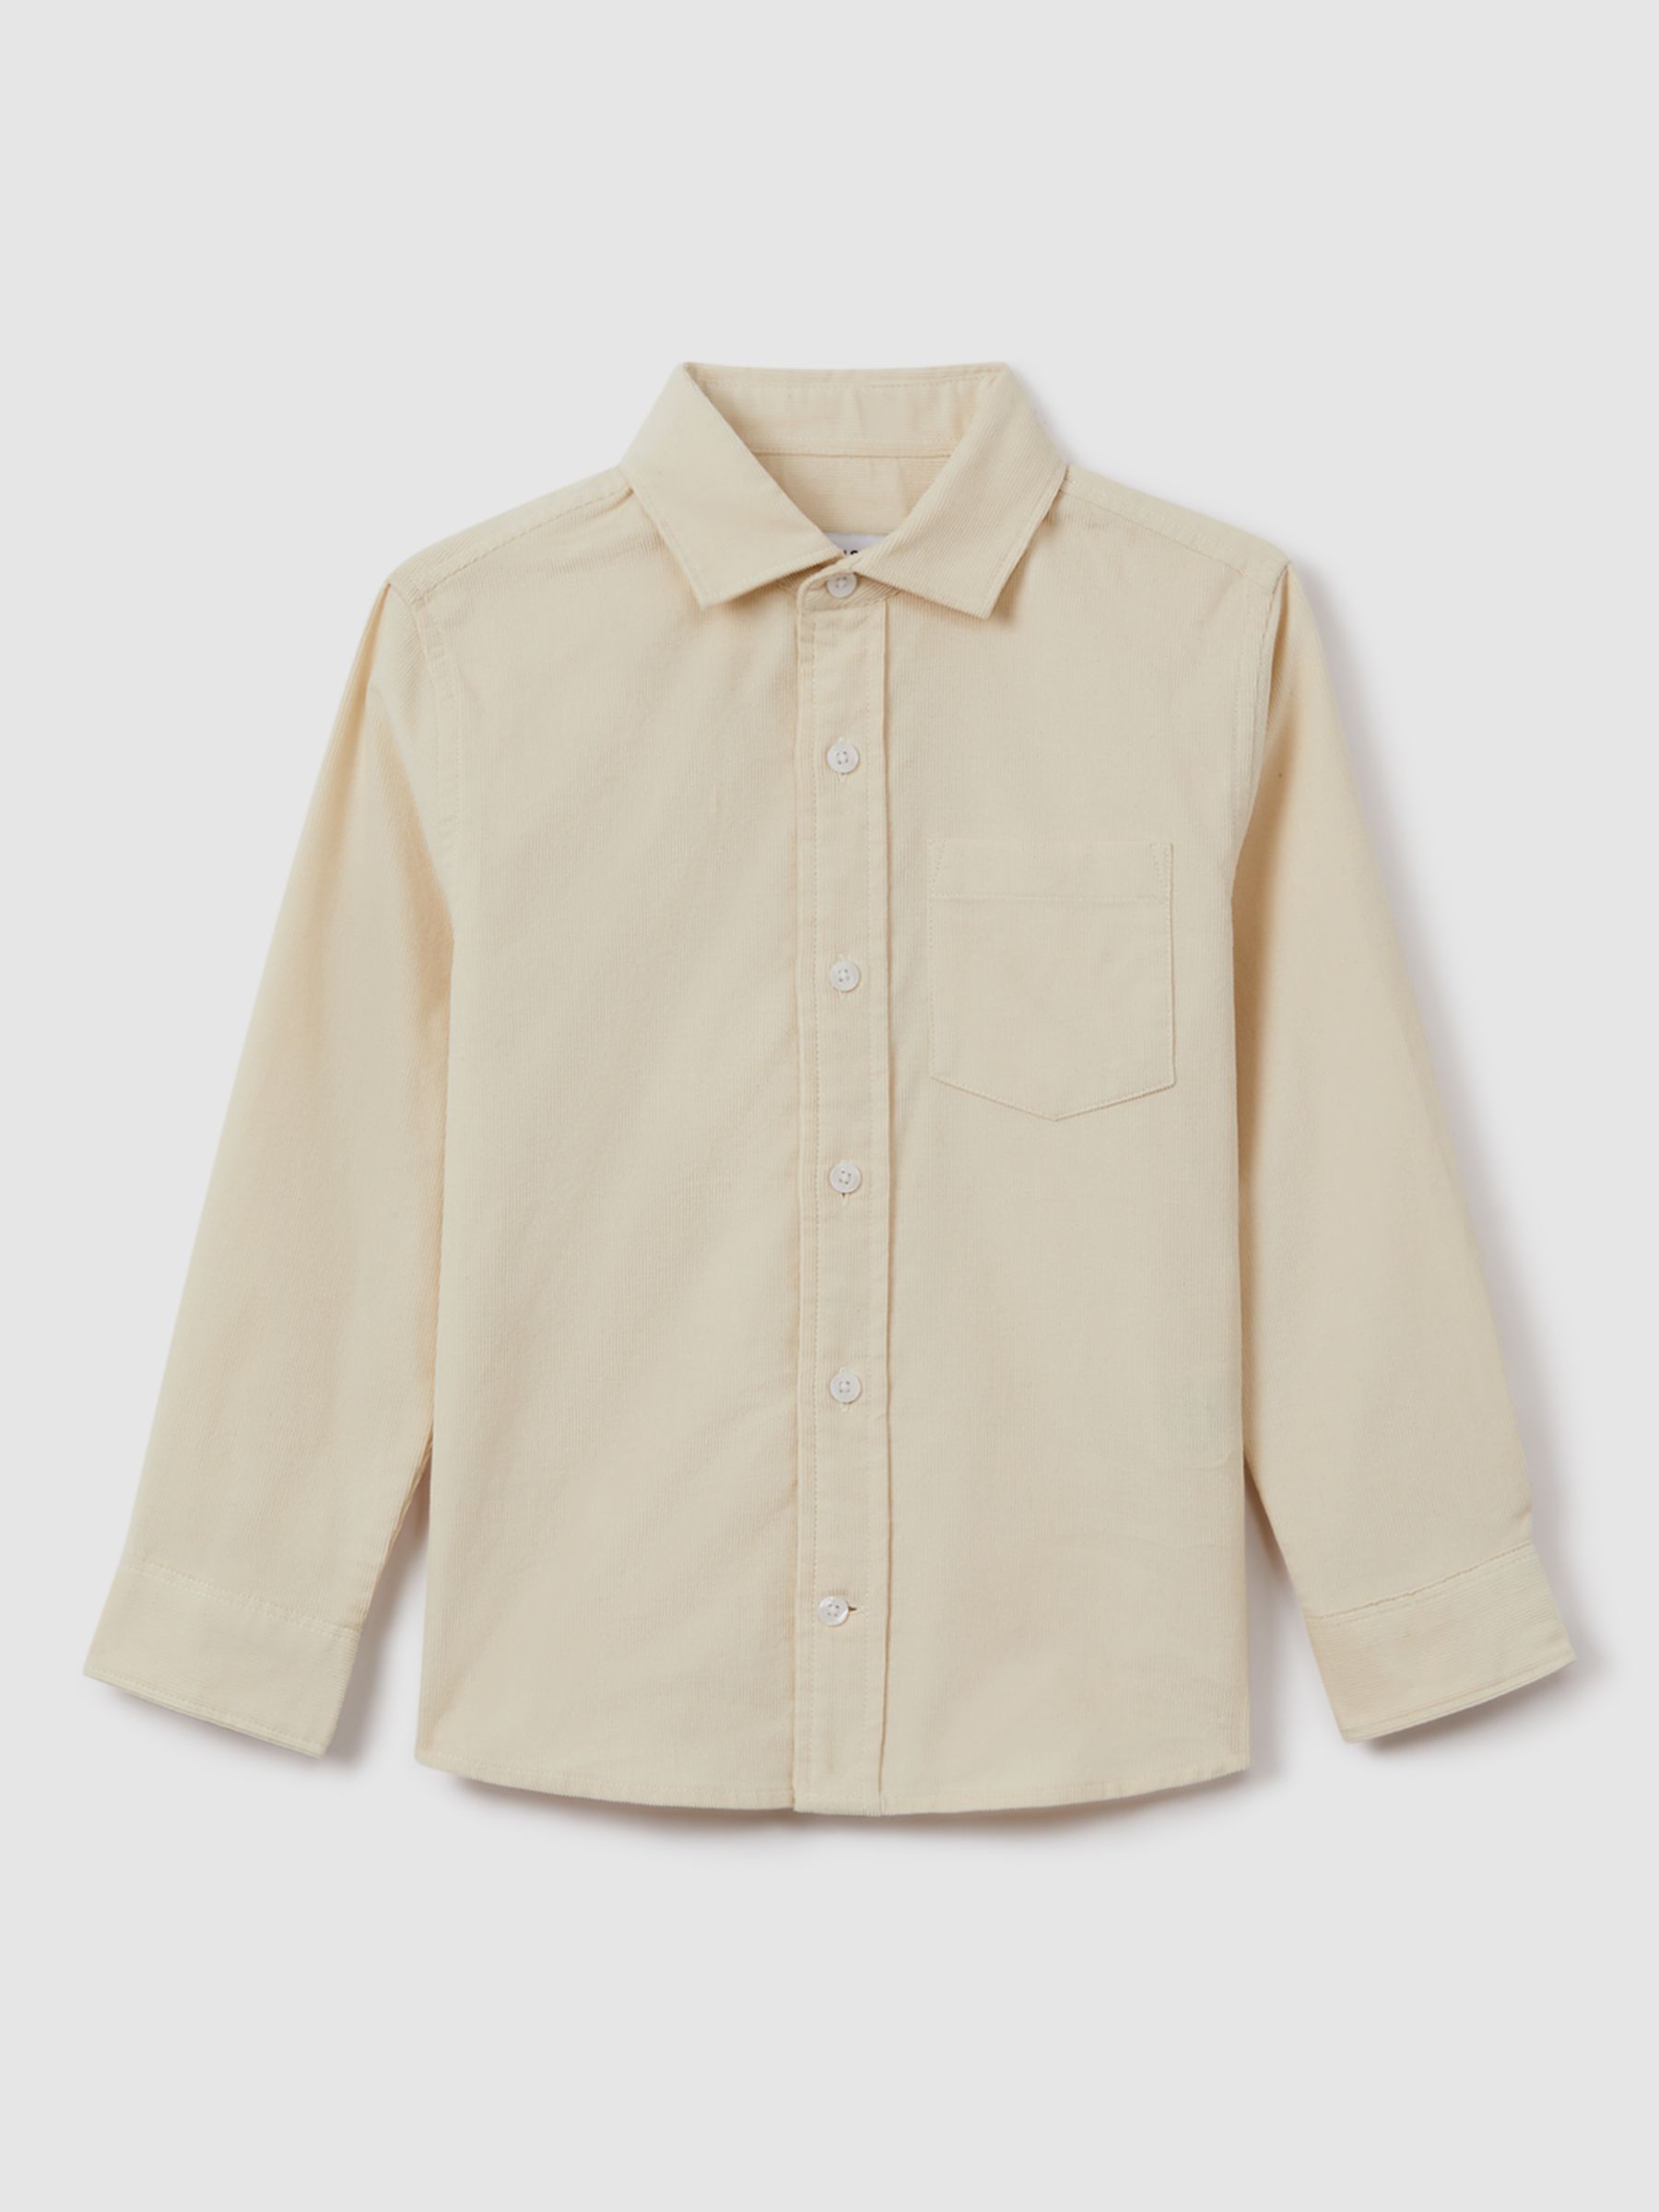 Reiss Kids' Albion Cutaway Collar Long Sleeve Shirt, White, 6-7 years